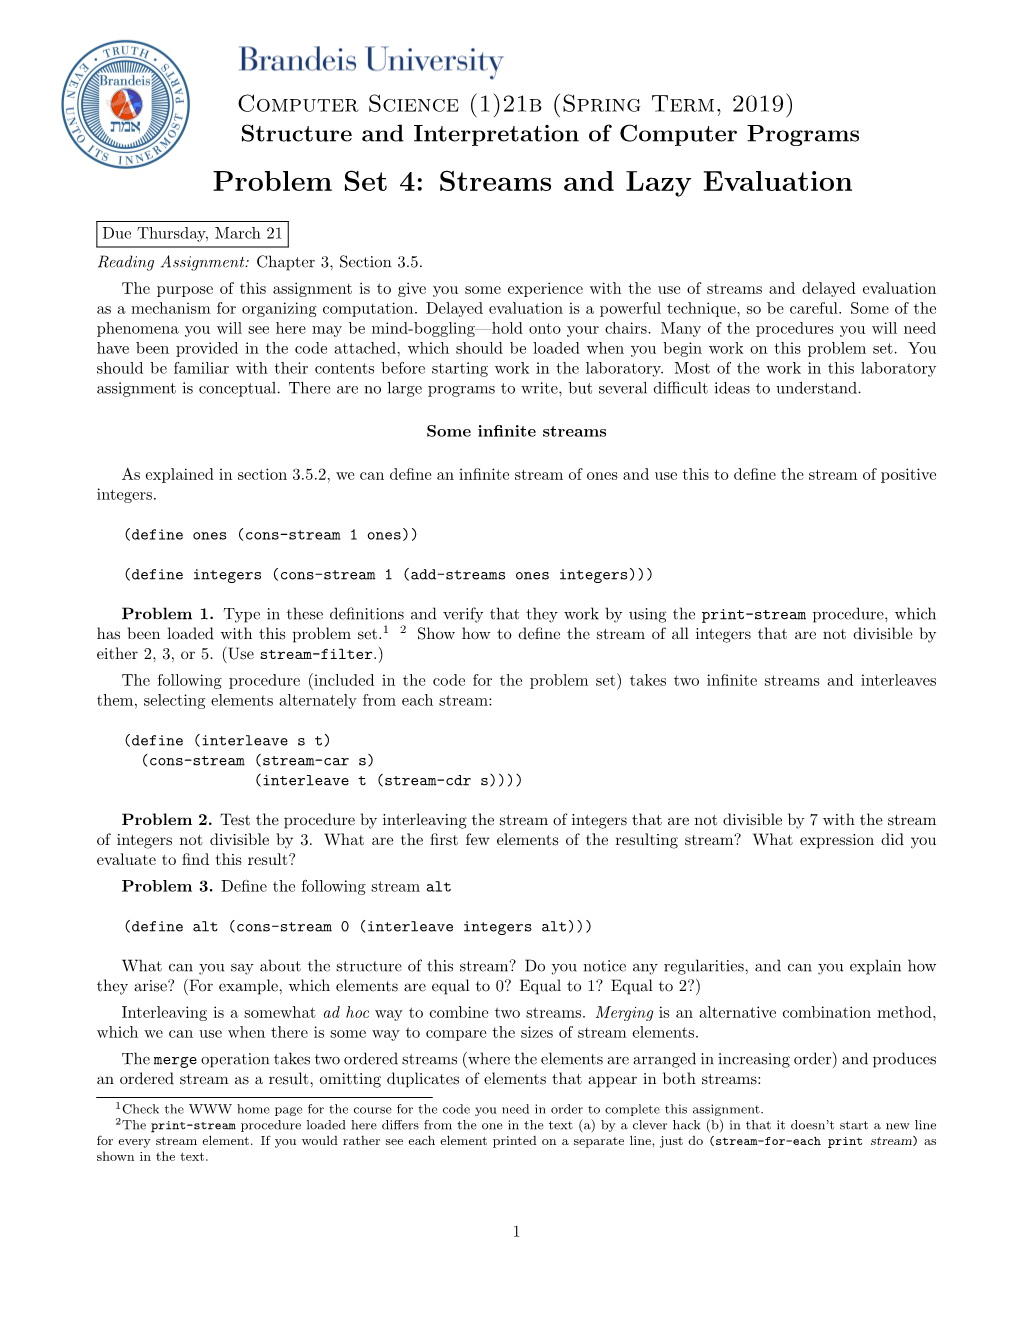 Problem Set 4: Streams and Lazy Evaluation